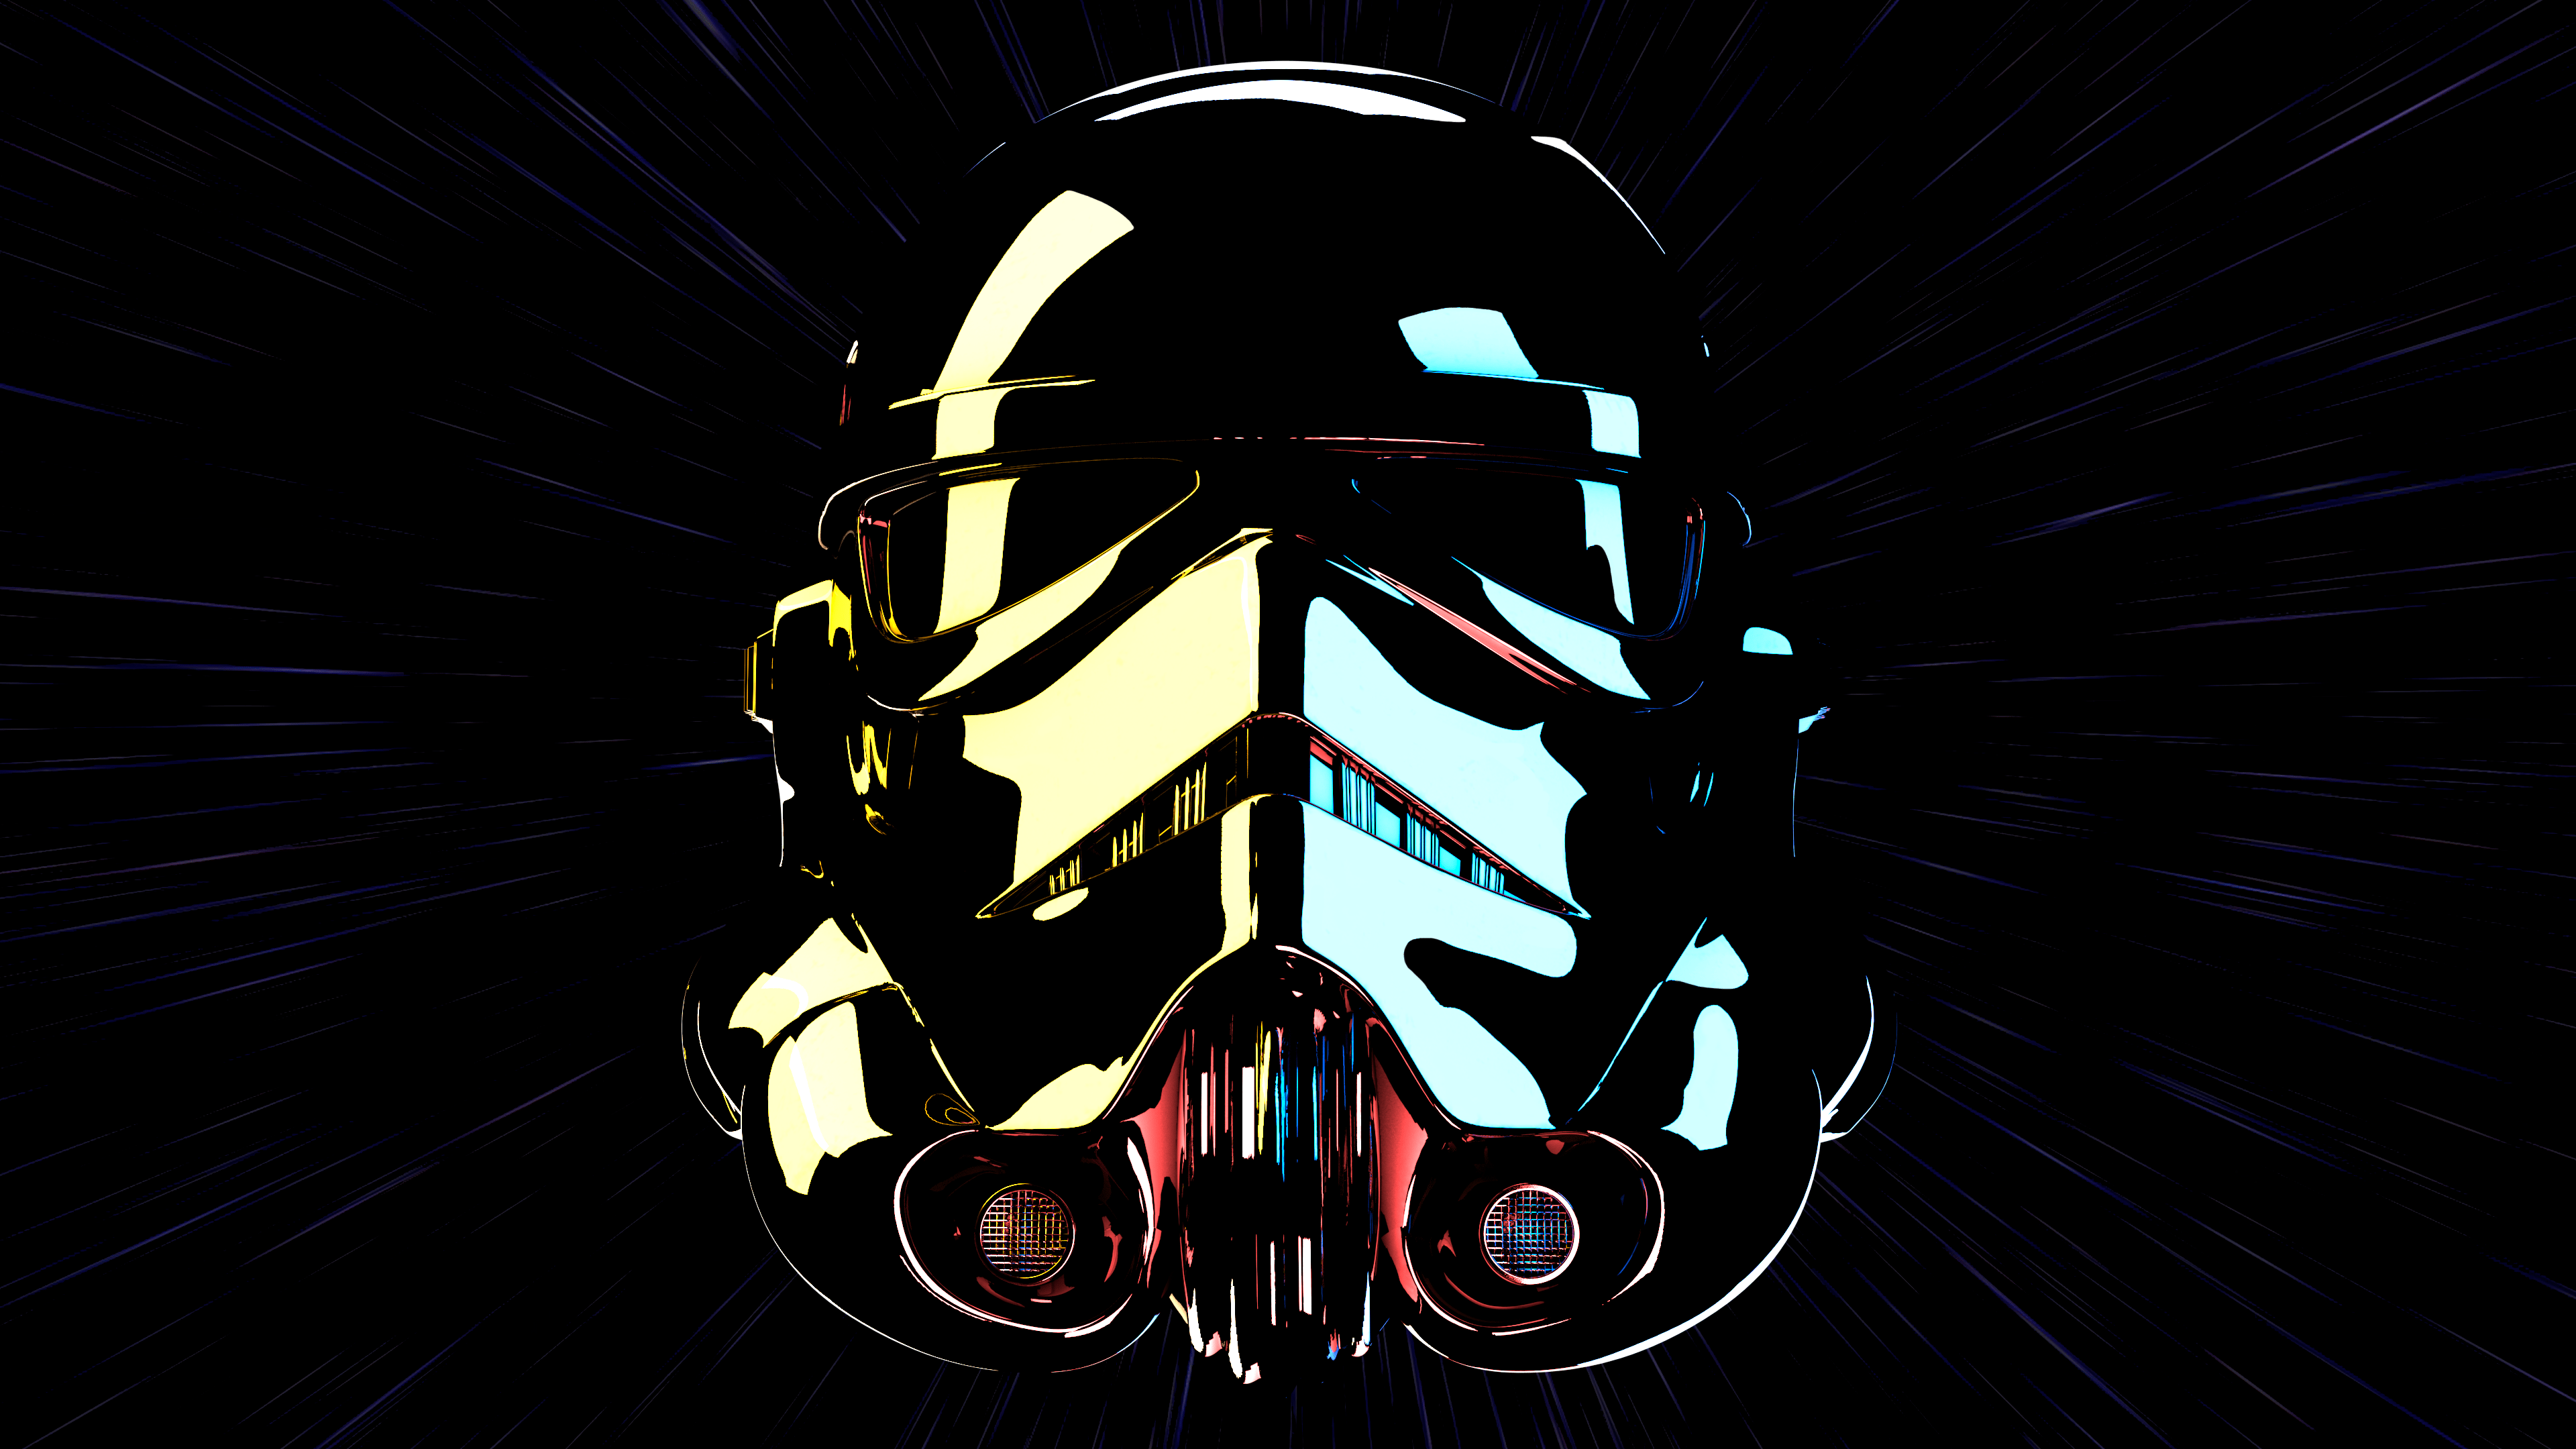 The Clone trooper helmet in a black background - Star Wars